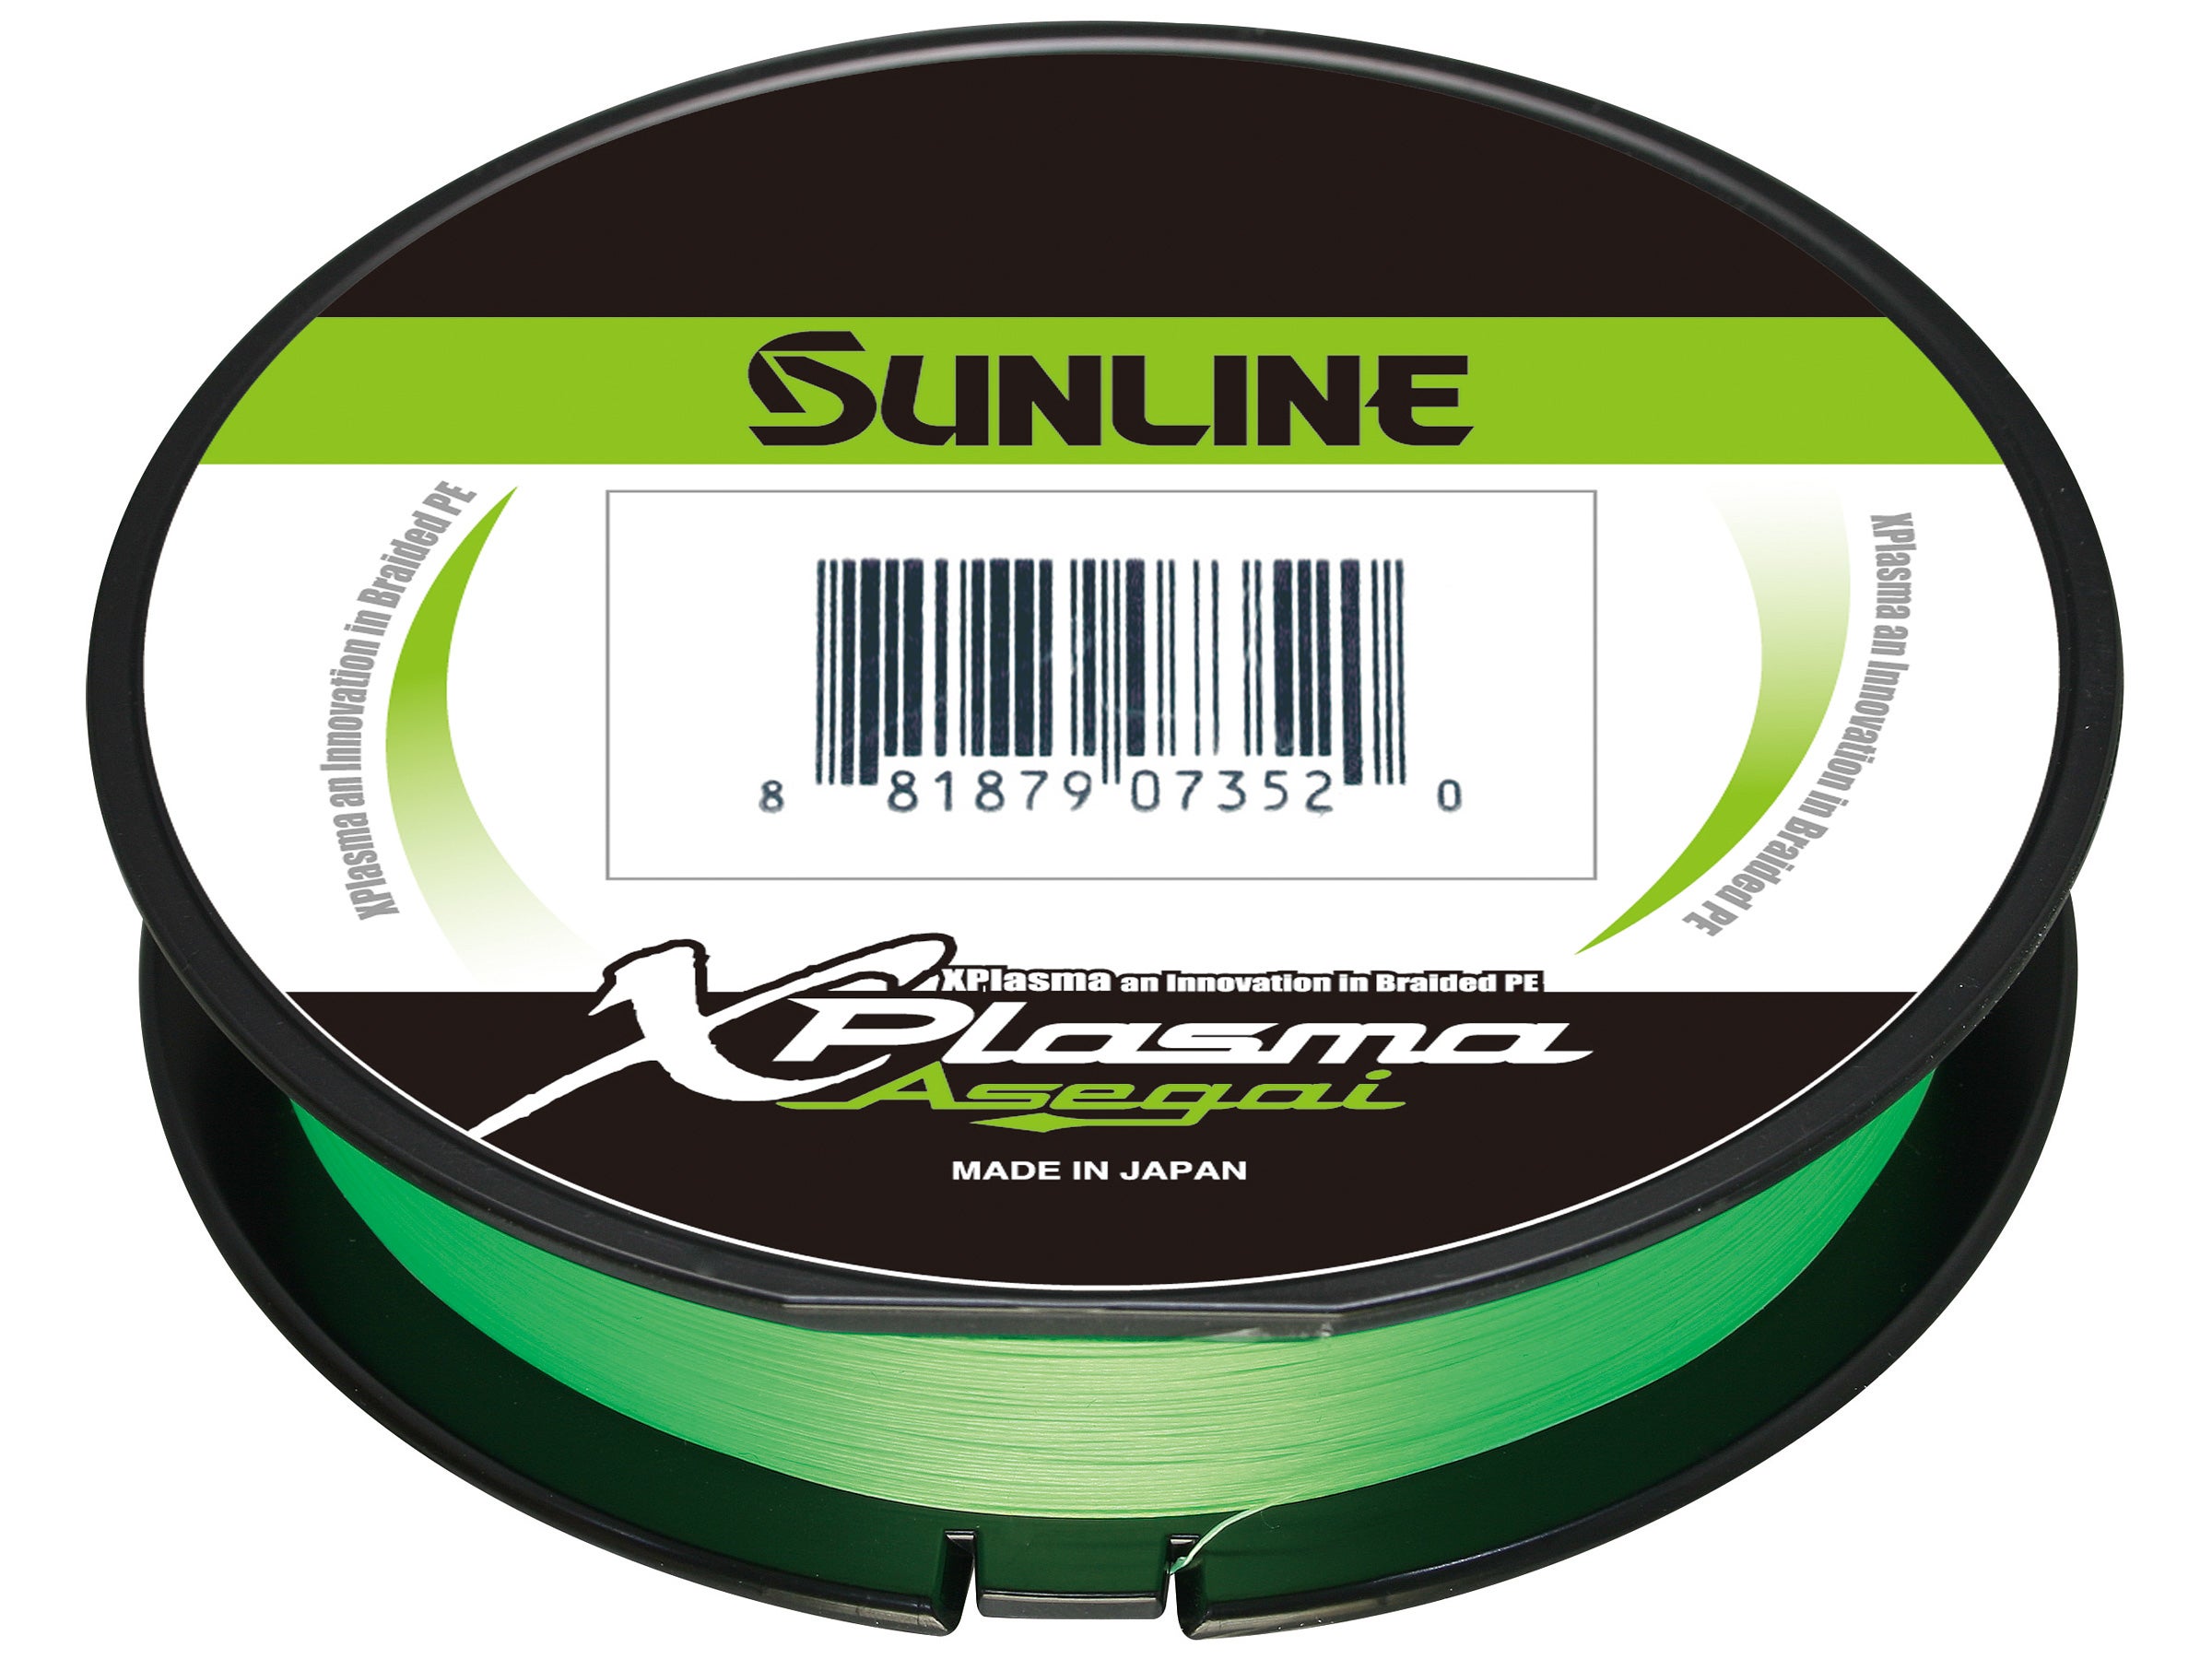 5035 Sunline Asegai Xplasma Braided Linie 165yds P.E 1.7 18lb Light Green 